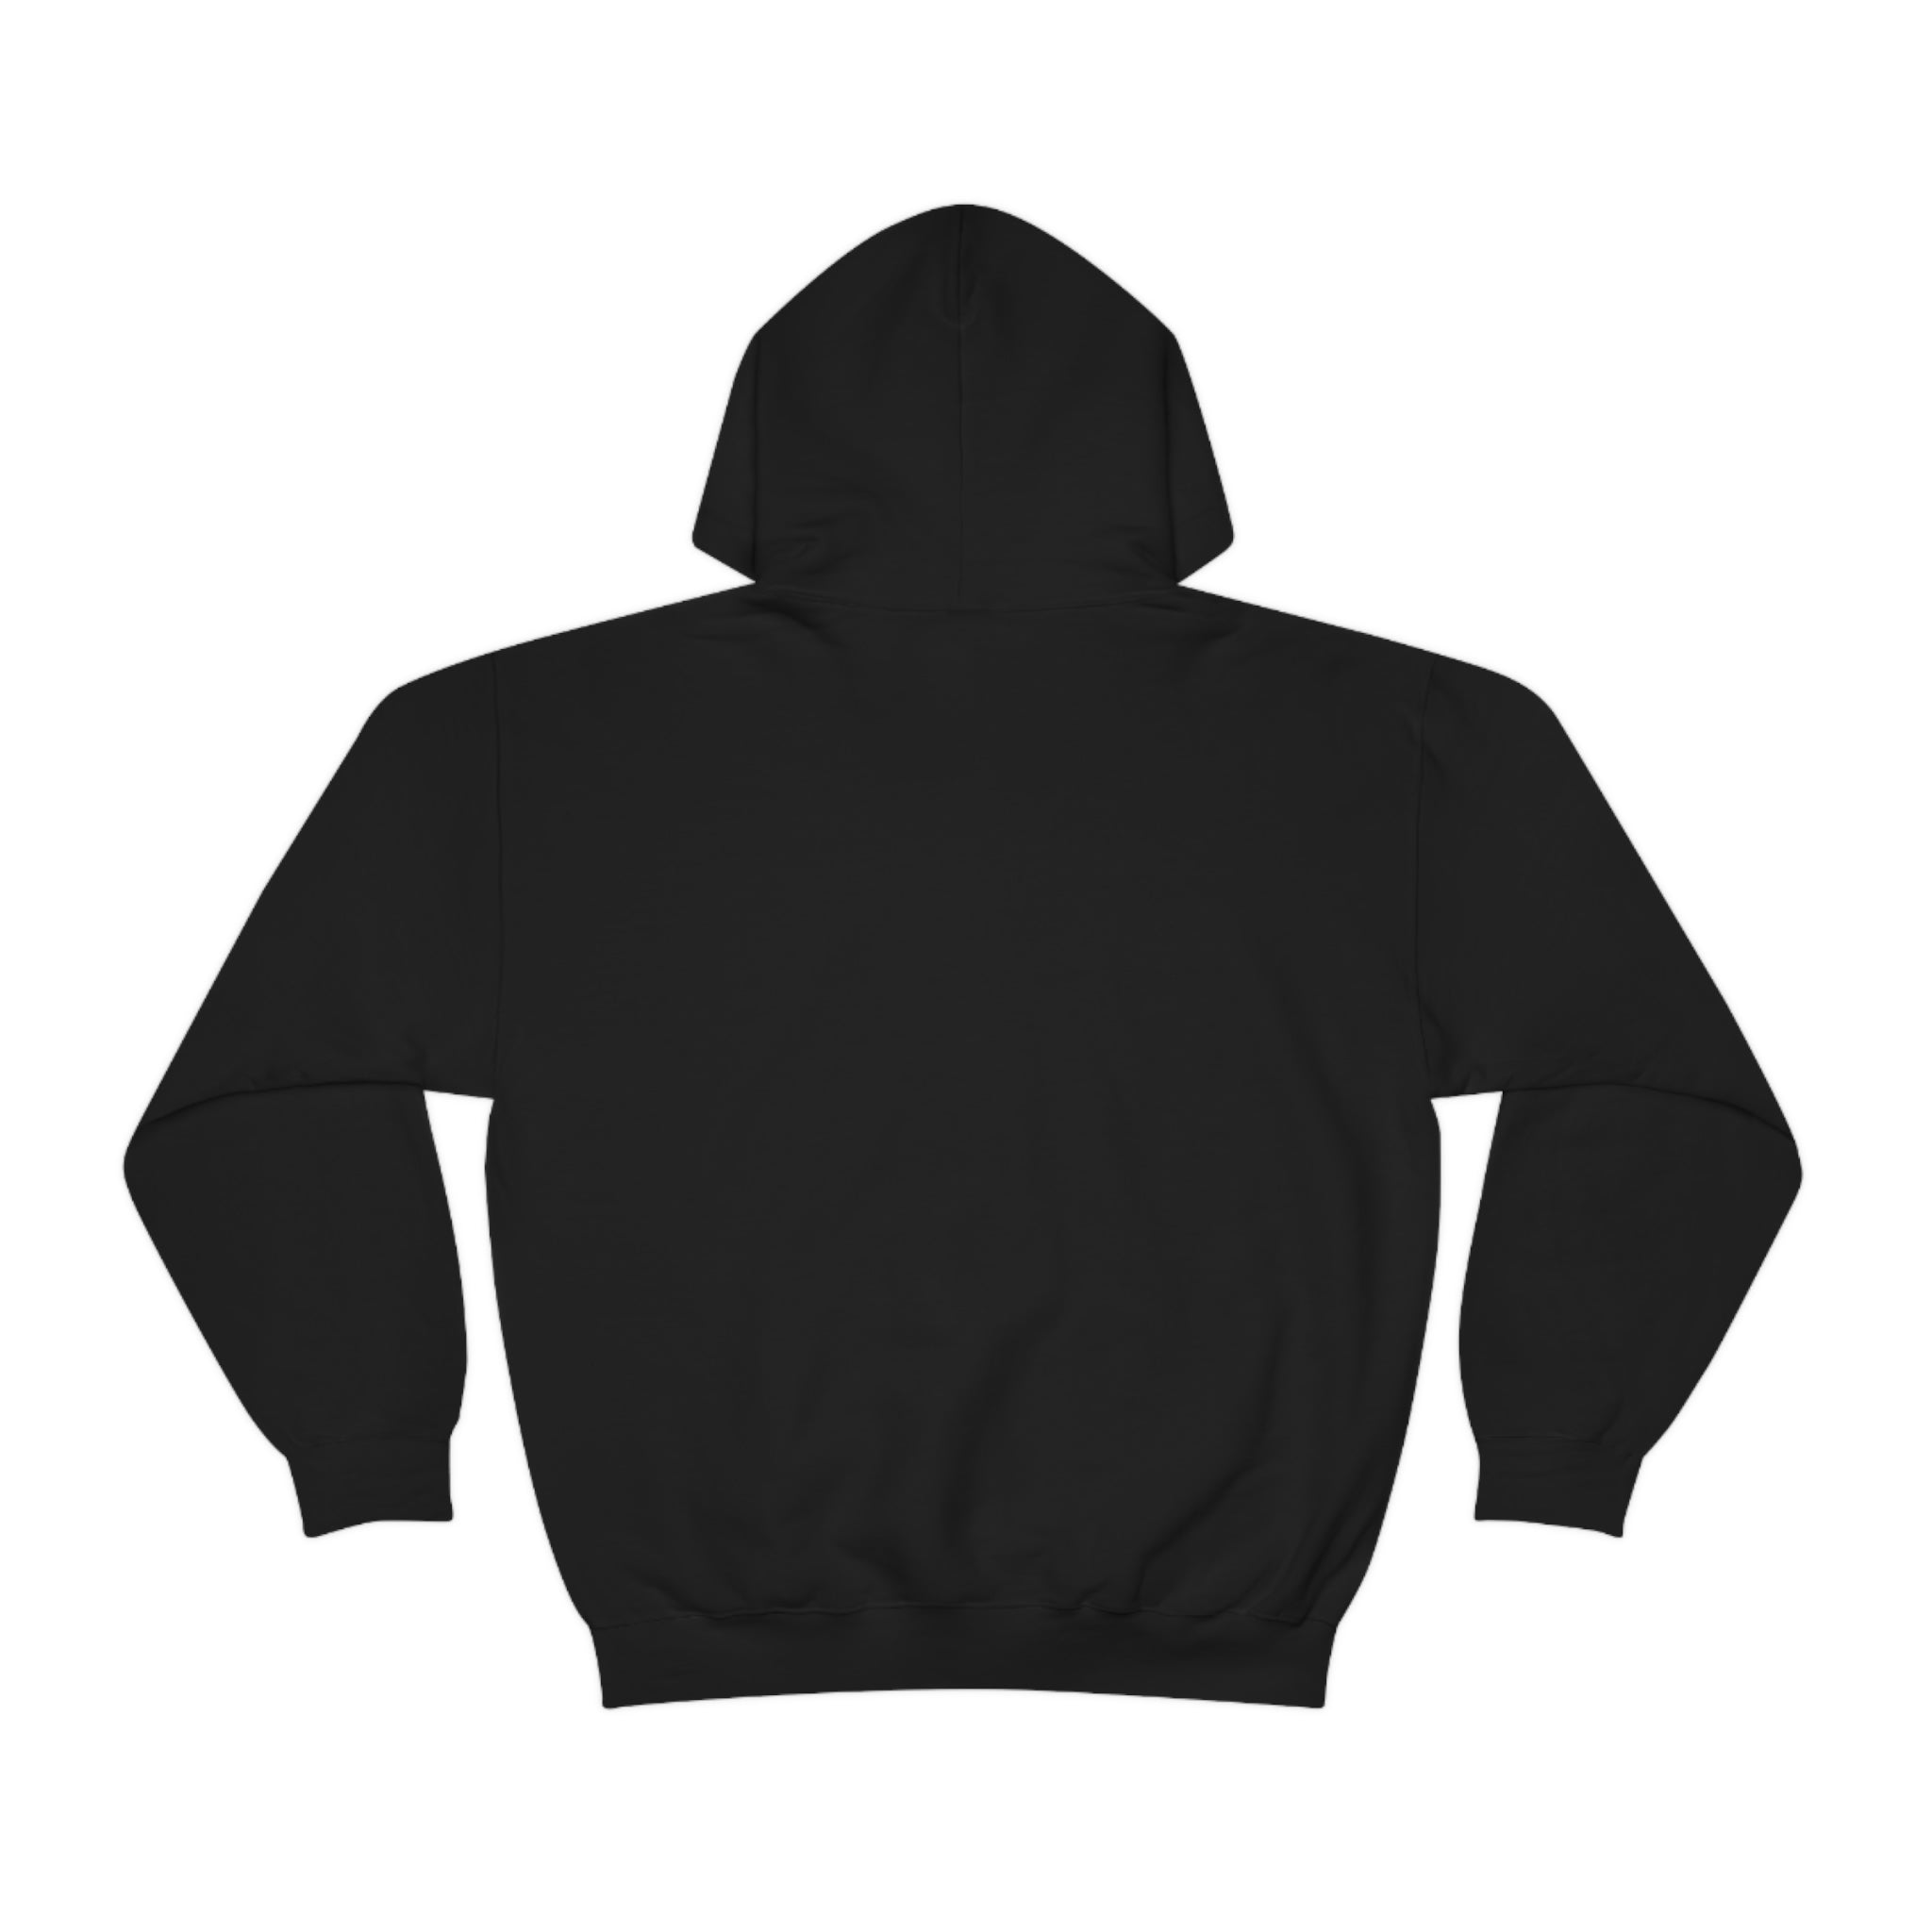 Black Excellence Hooded Sweatshirt